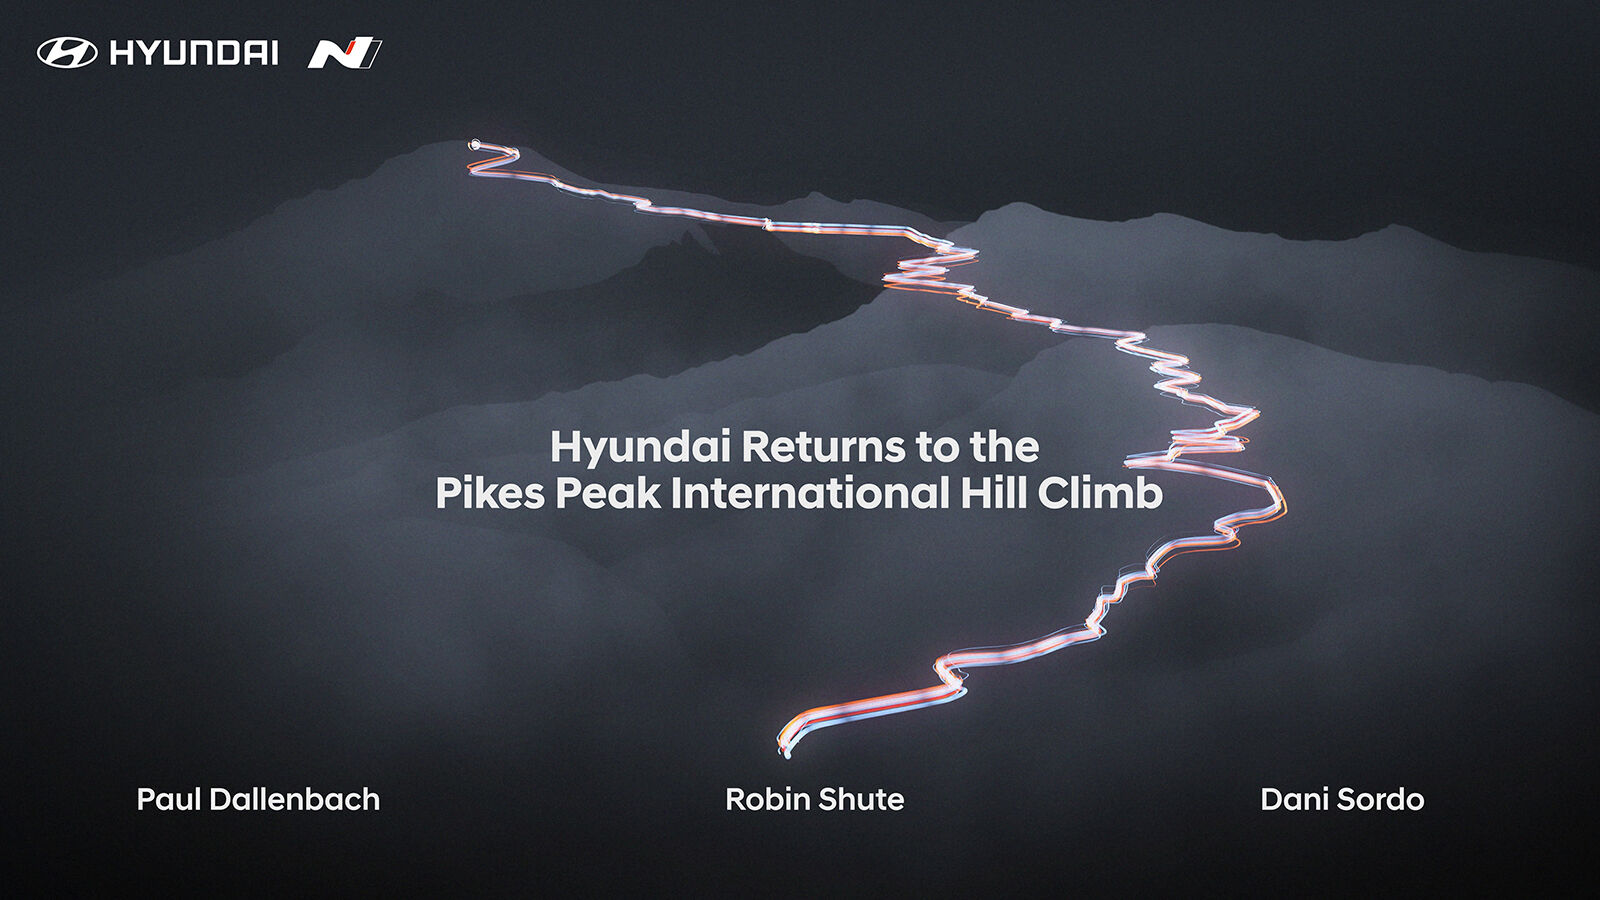 (Image 1) Hyundai Motor Returns to the Pikes Peak International Hill Climb